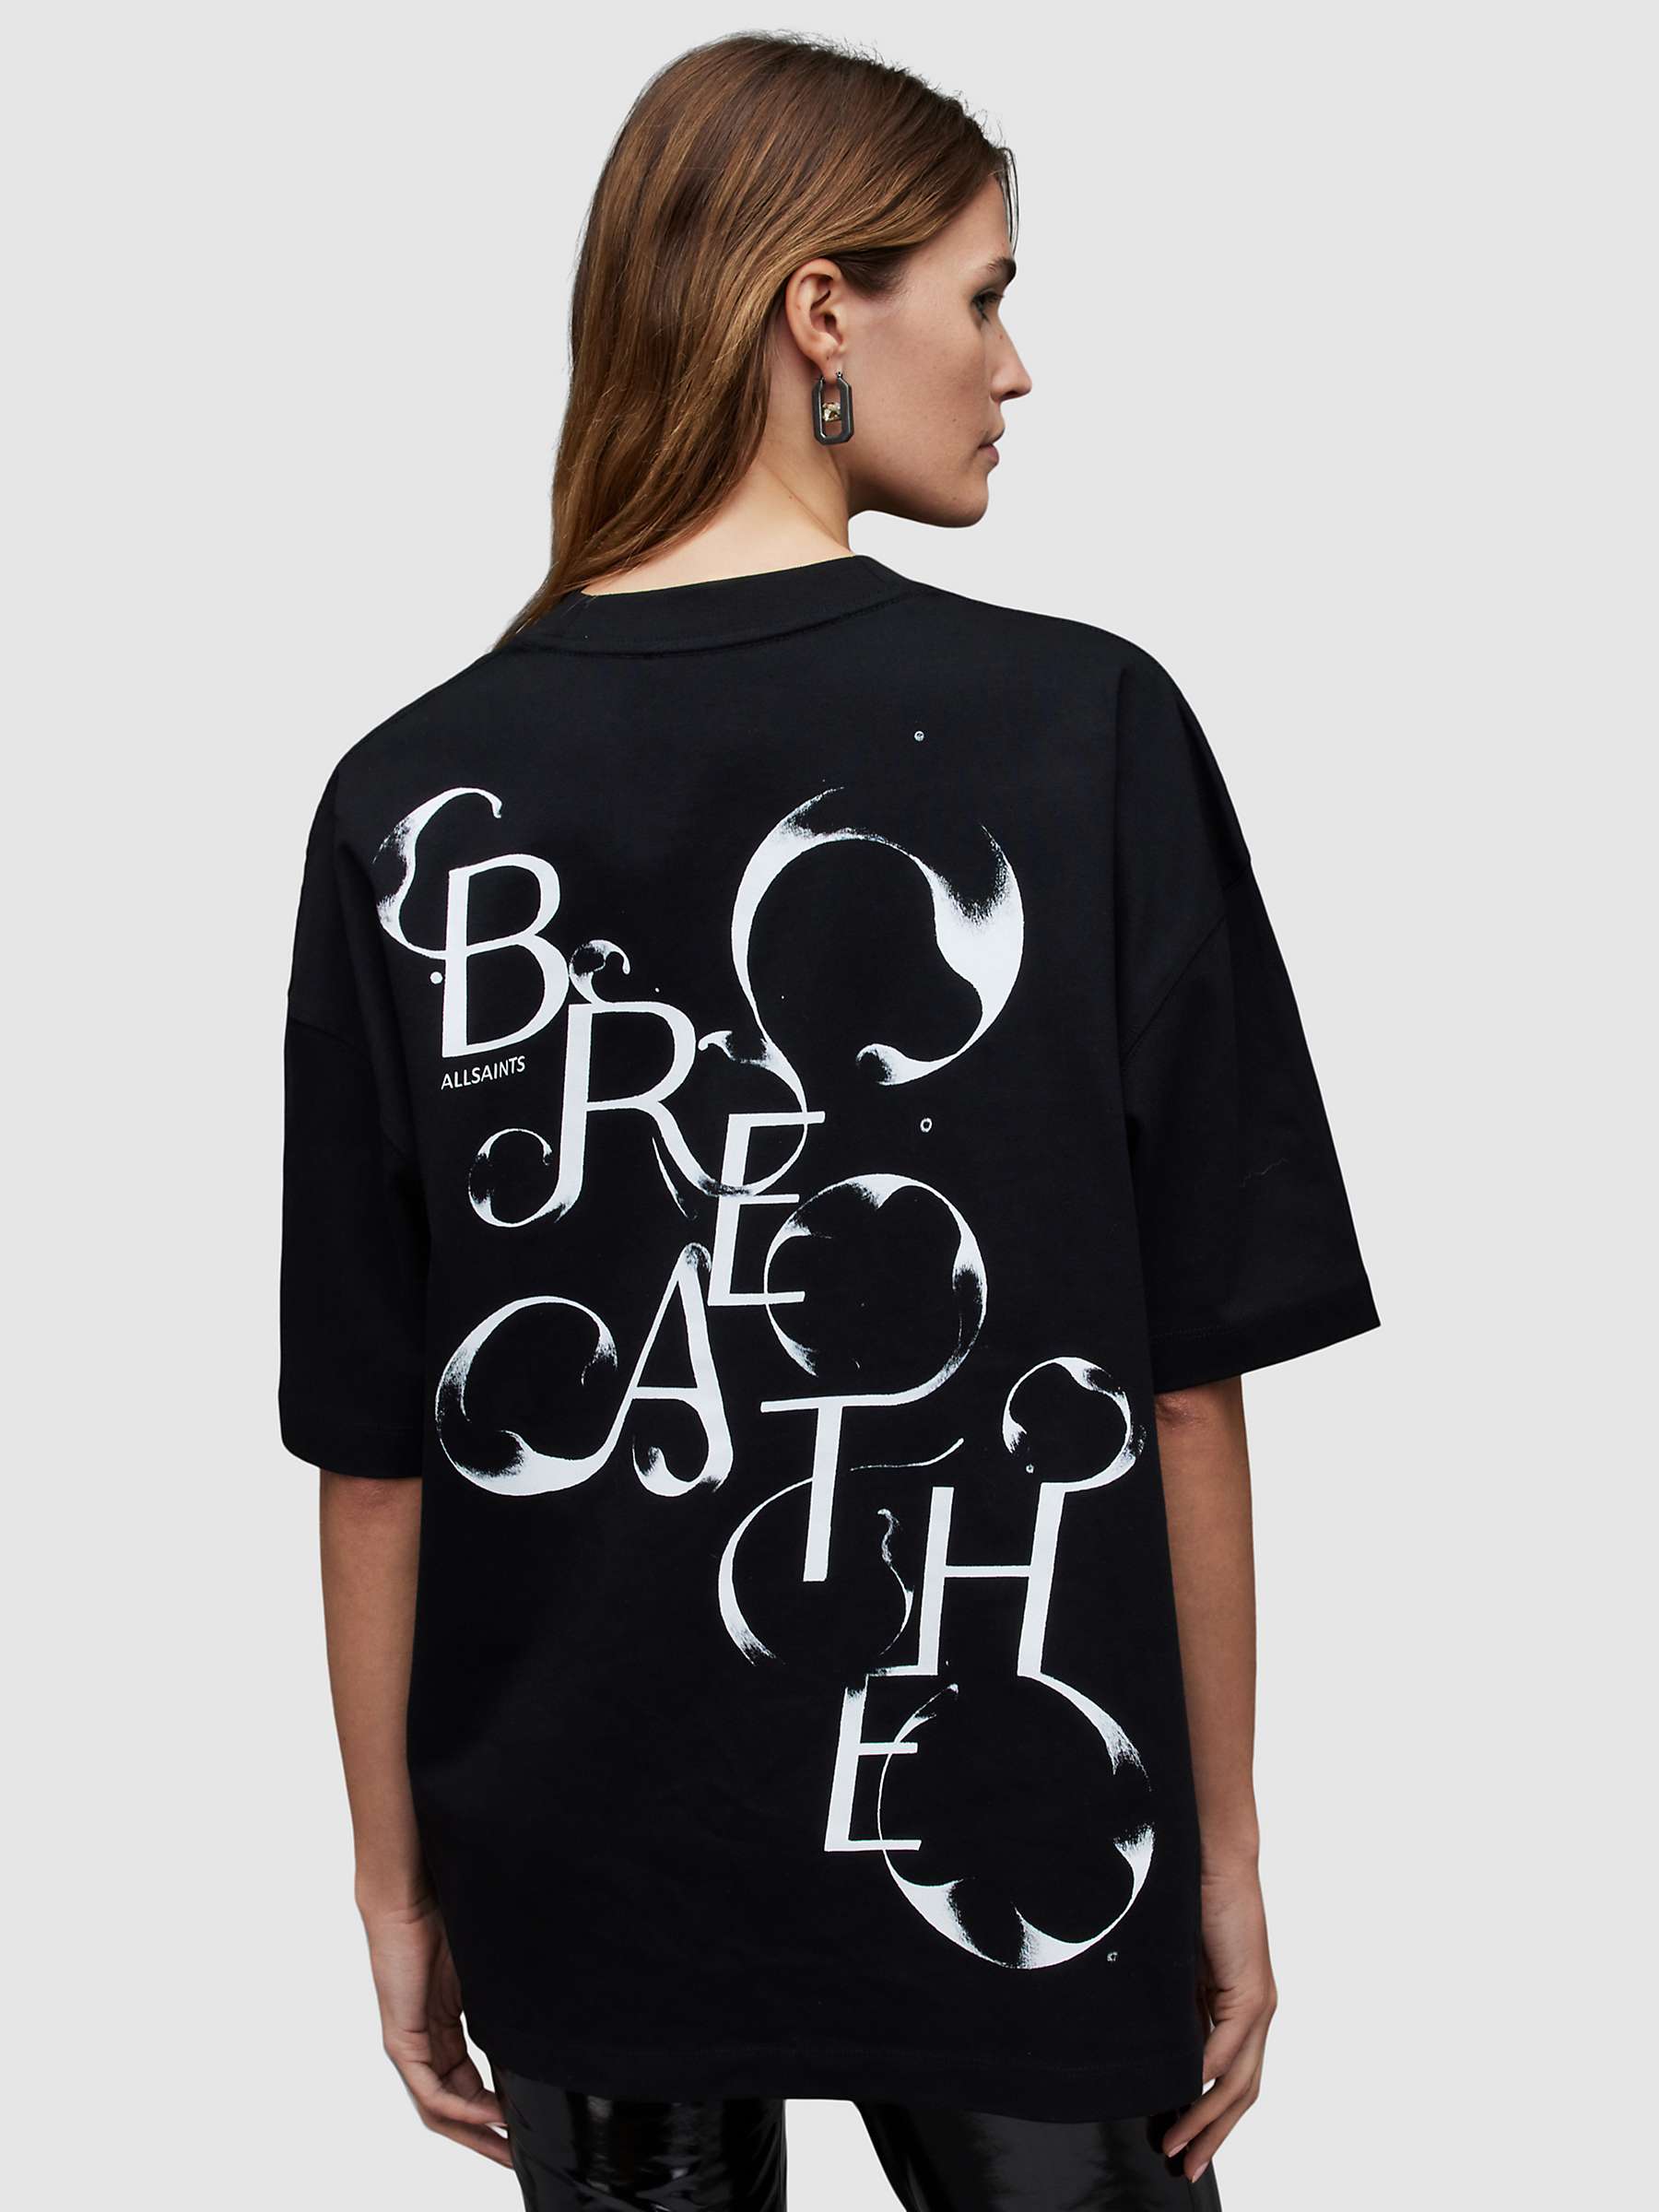 Buy AllSaints Moments Organic Cotton T-Shirt, Black Online at johnlewis.com